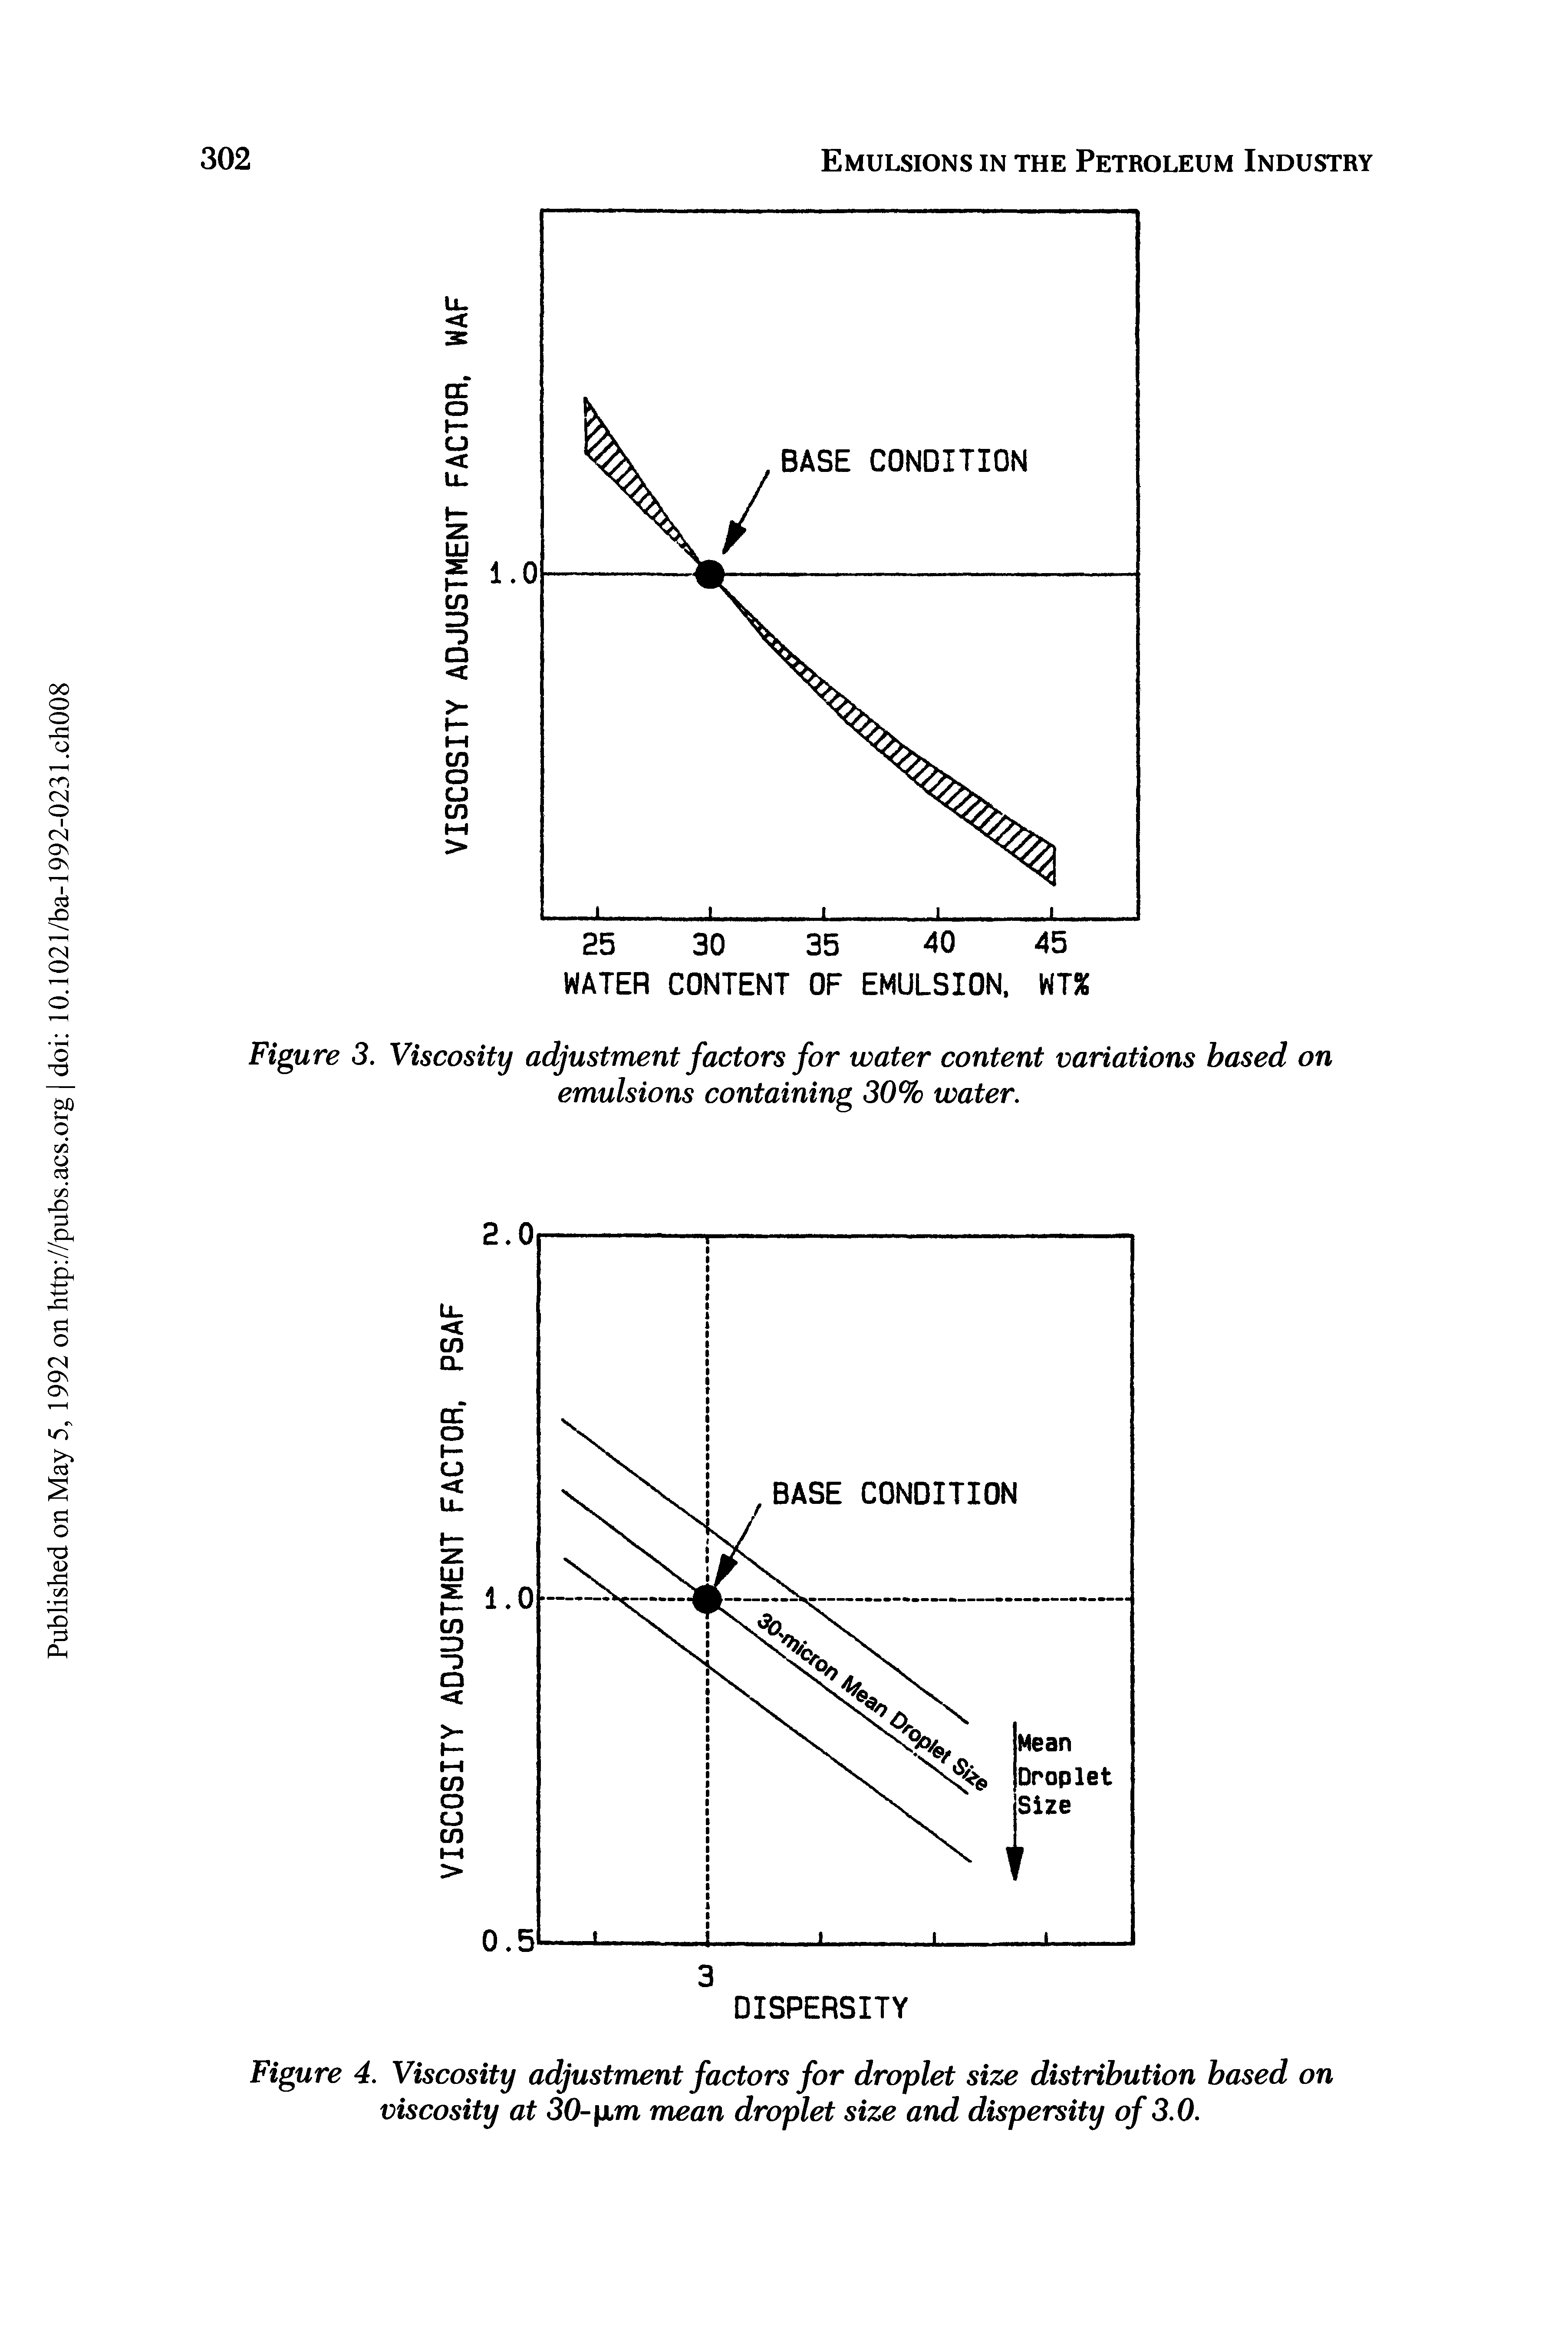 Figure 4. Viscosity adjustment factors for droplet size distribution based on viscosity at 30- im mean droplet size and dispersity of 3.0.